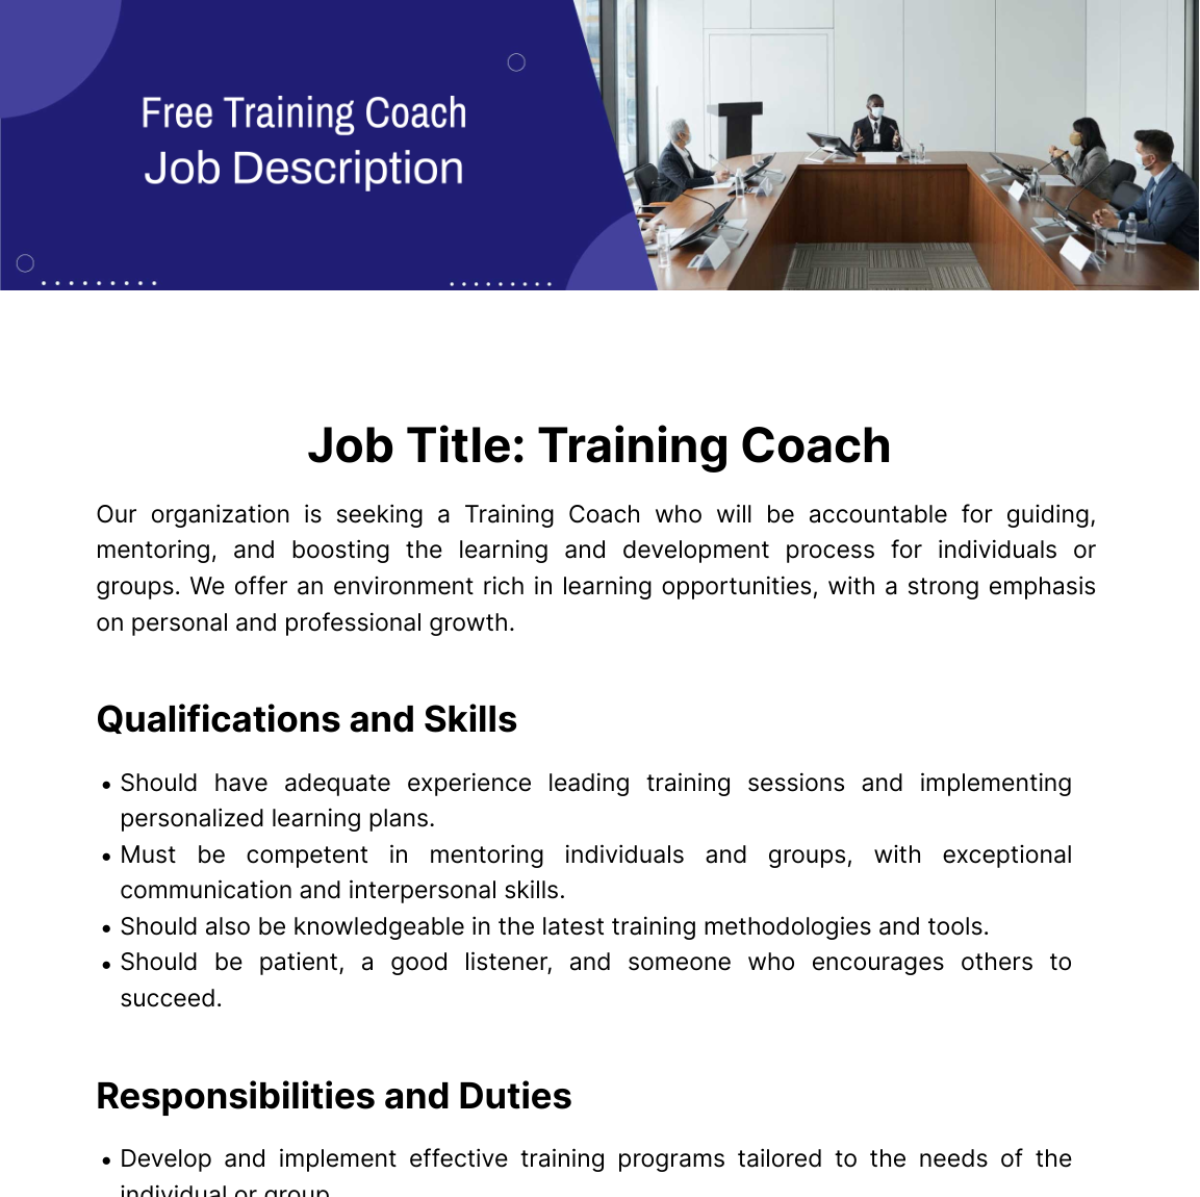 Free Training Coach Job Description Template